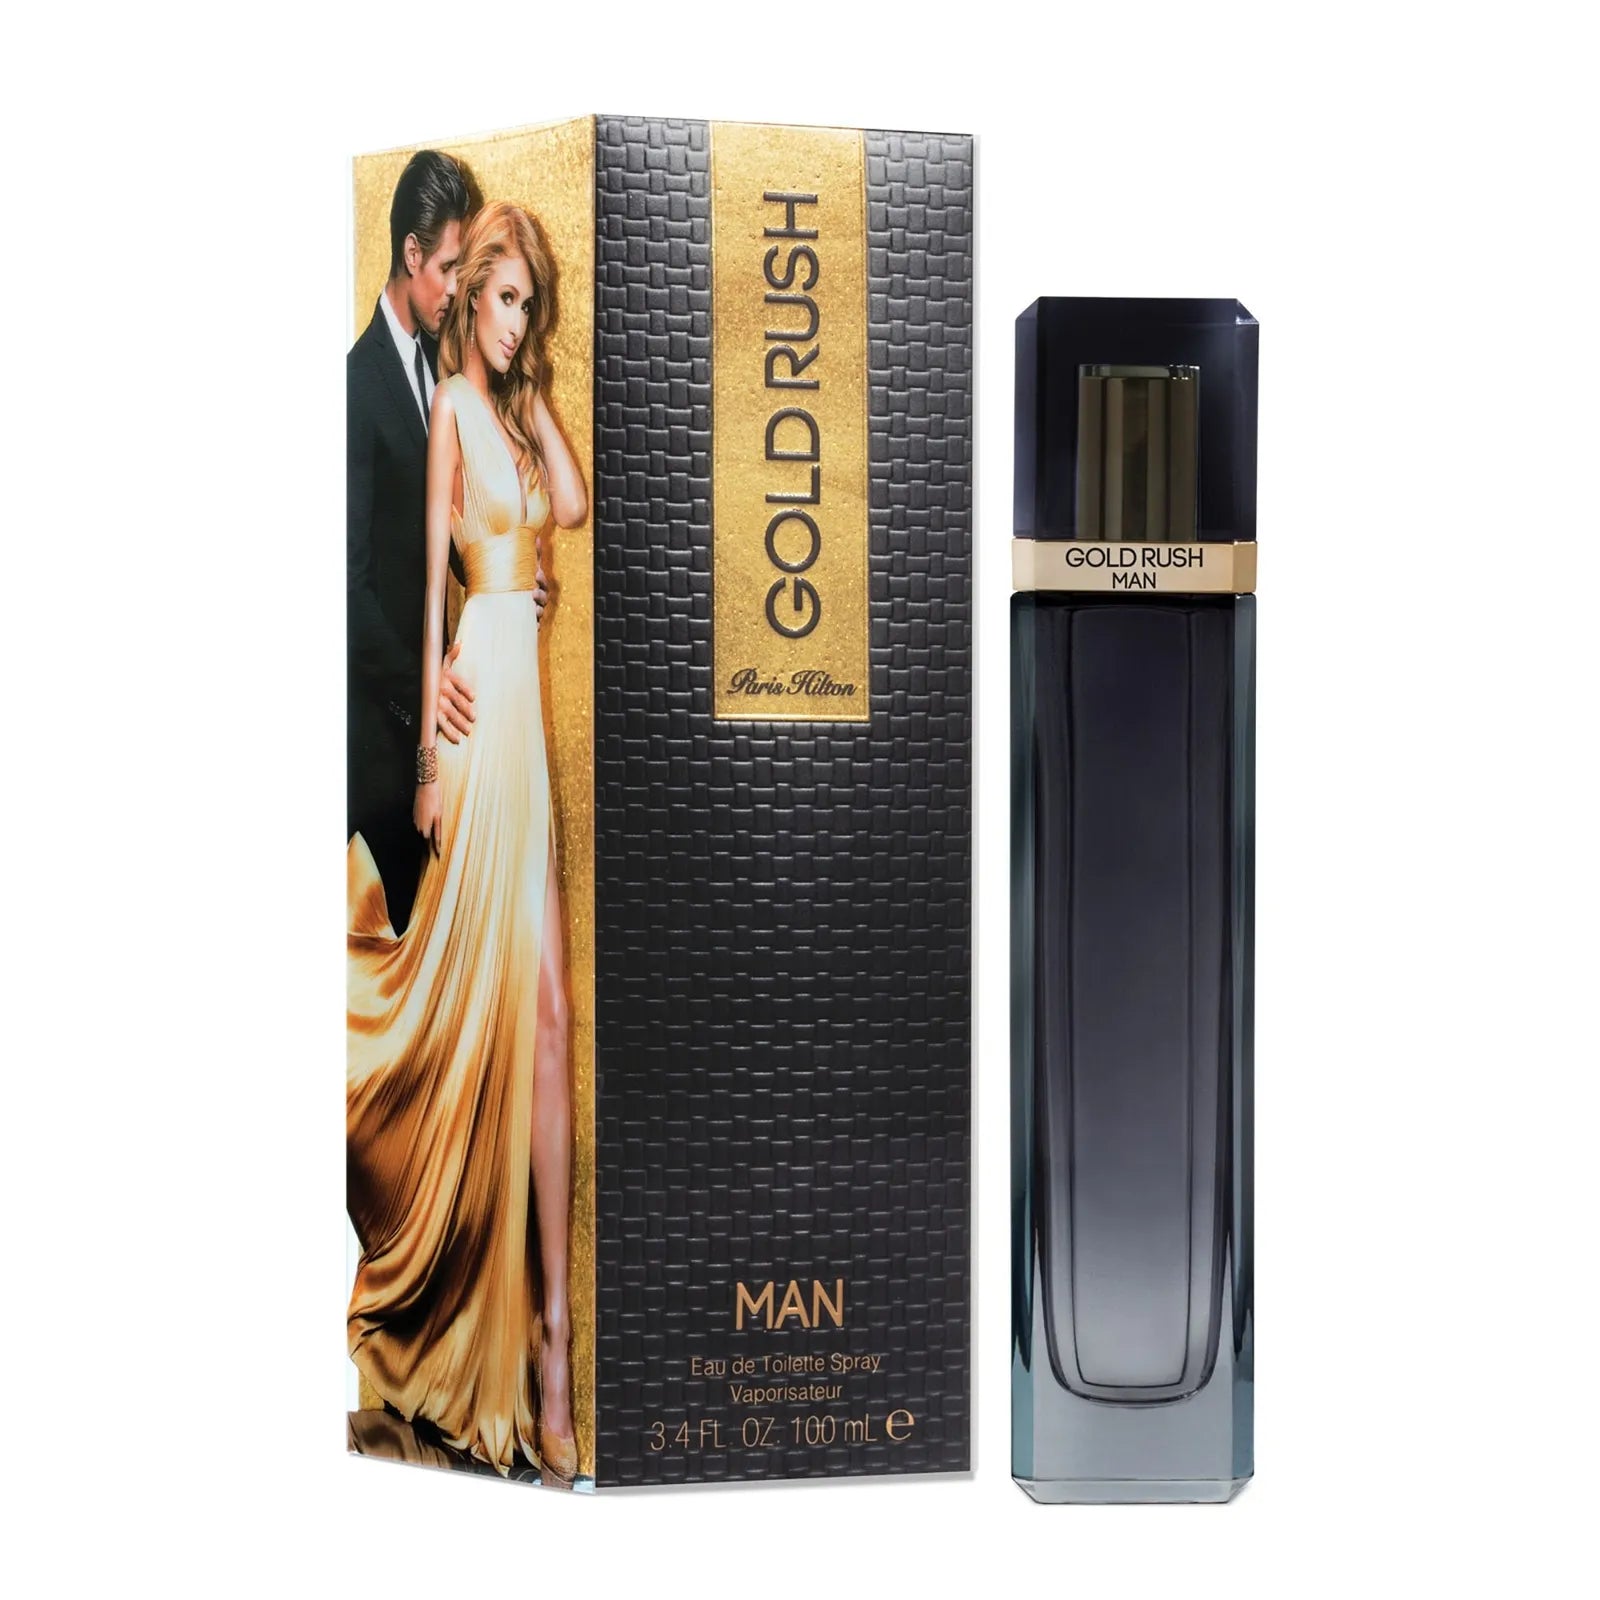 Gold Rush Man / EDT Spray 3.4 oz 100 ml by Paris Hilton